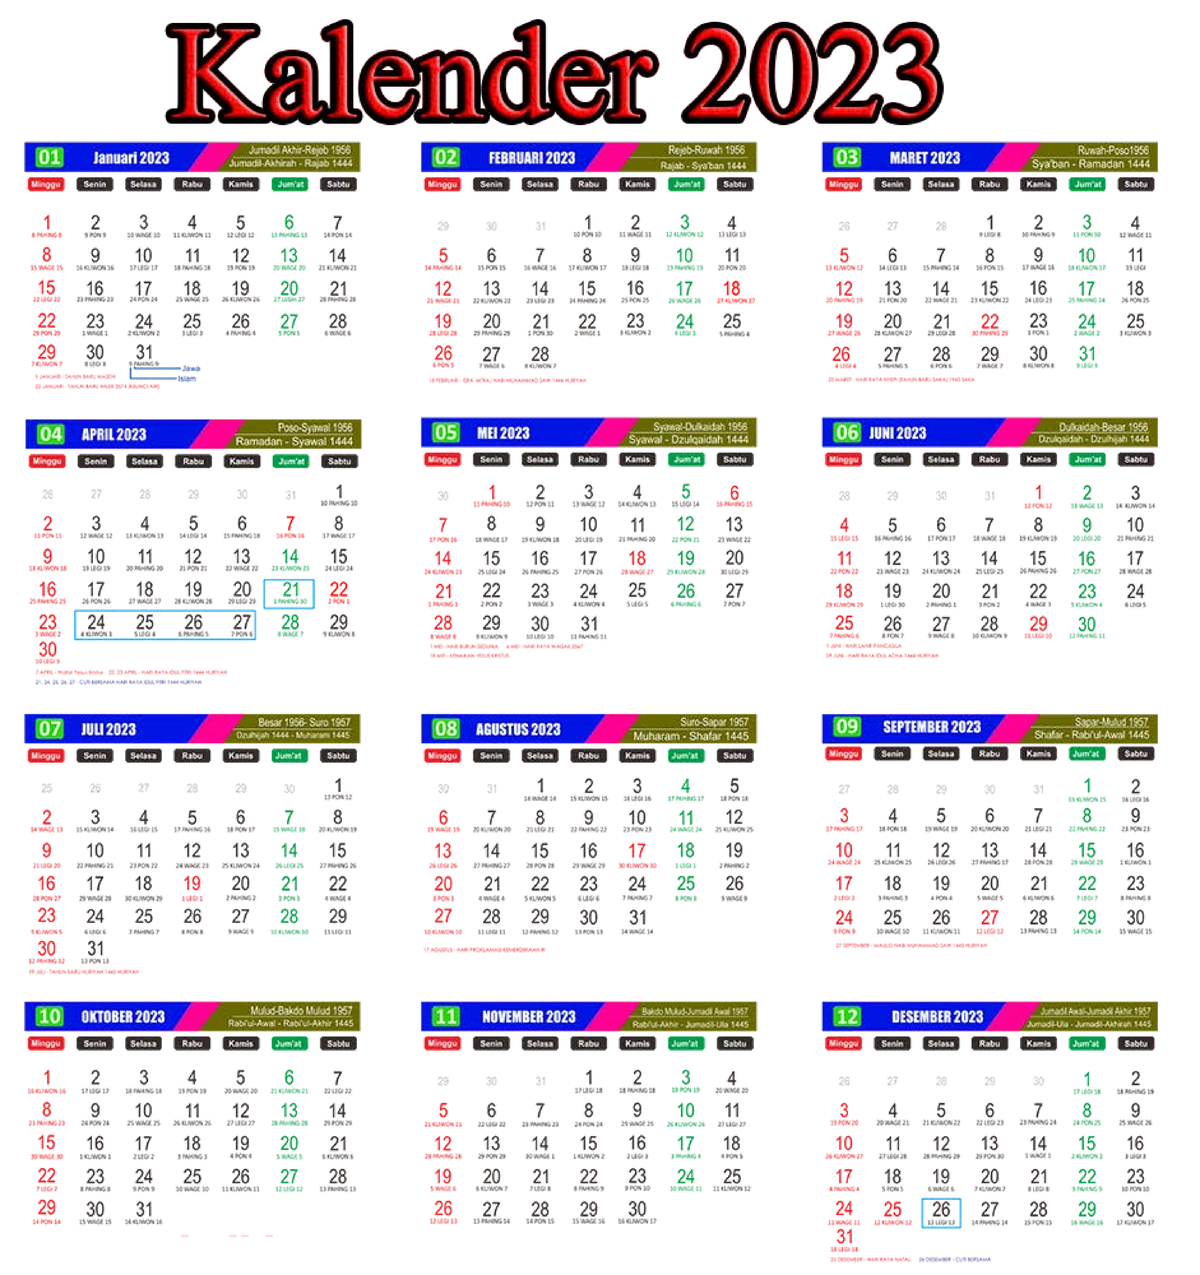 Kalender 2023 lengkap - asadsadsada - Manajemen - Studocu